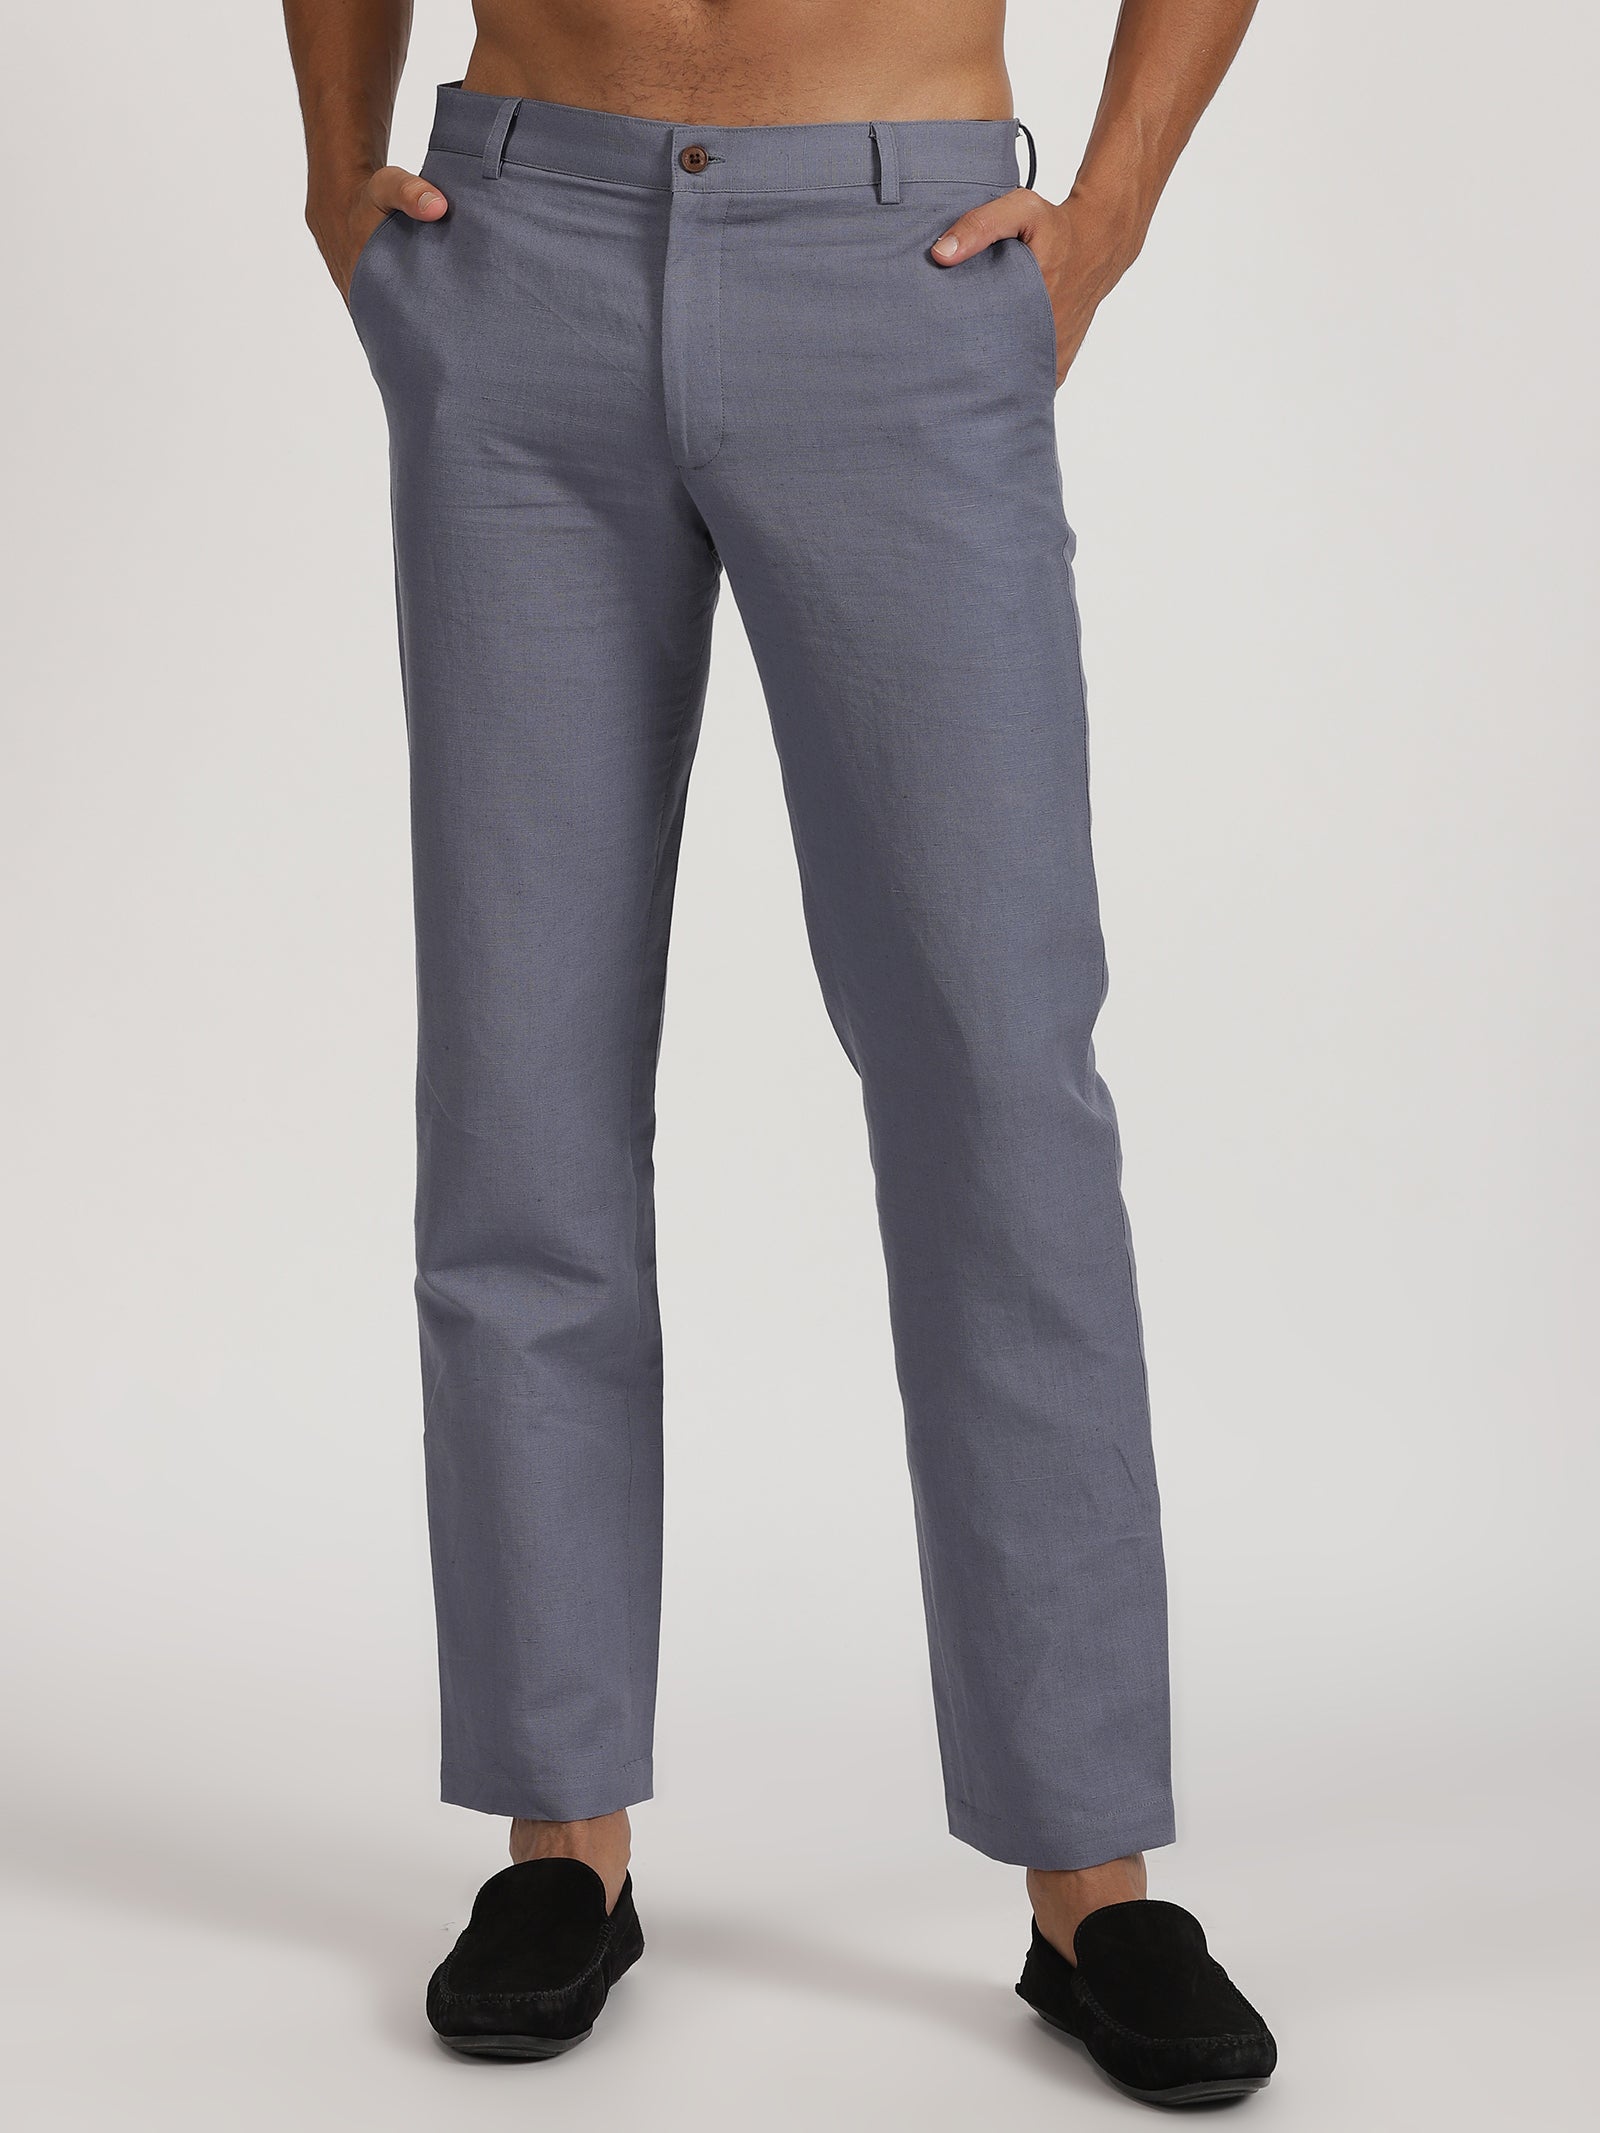 Pitch Blue Linen Trousers For Men | Linen Trousers For Men by Linen Trail